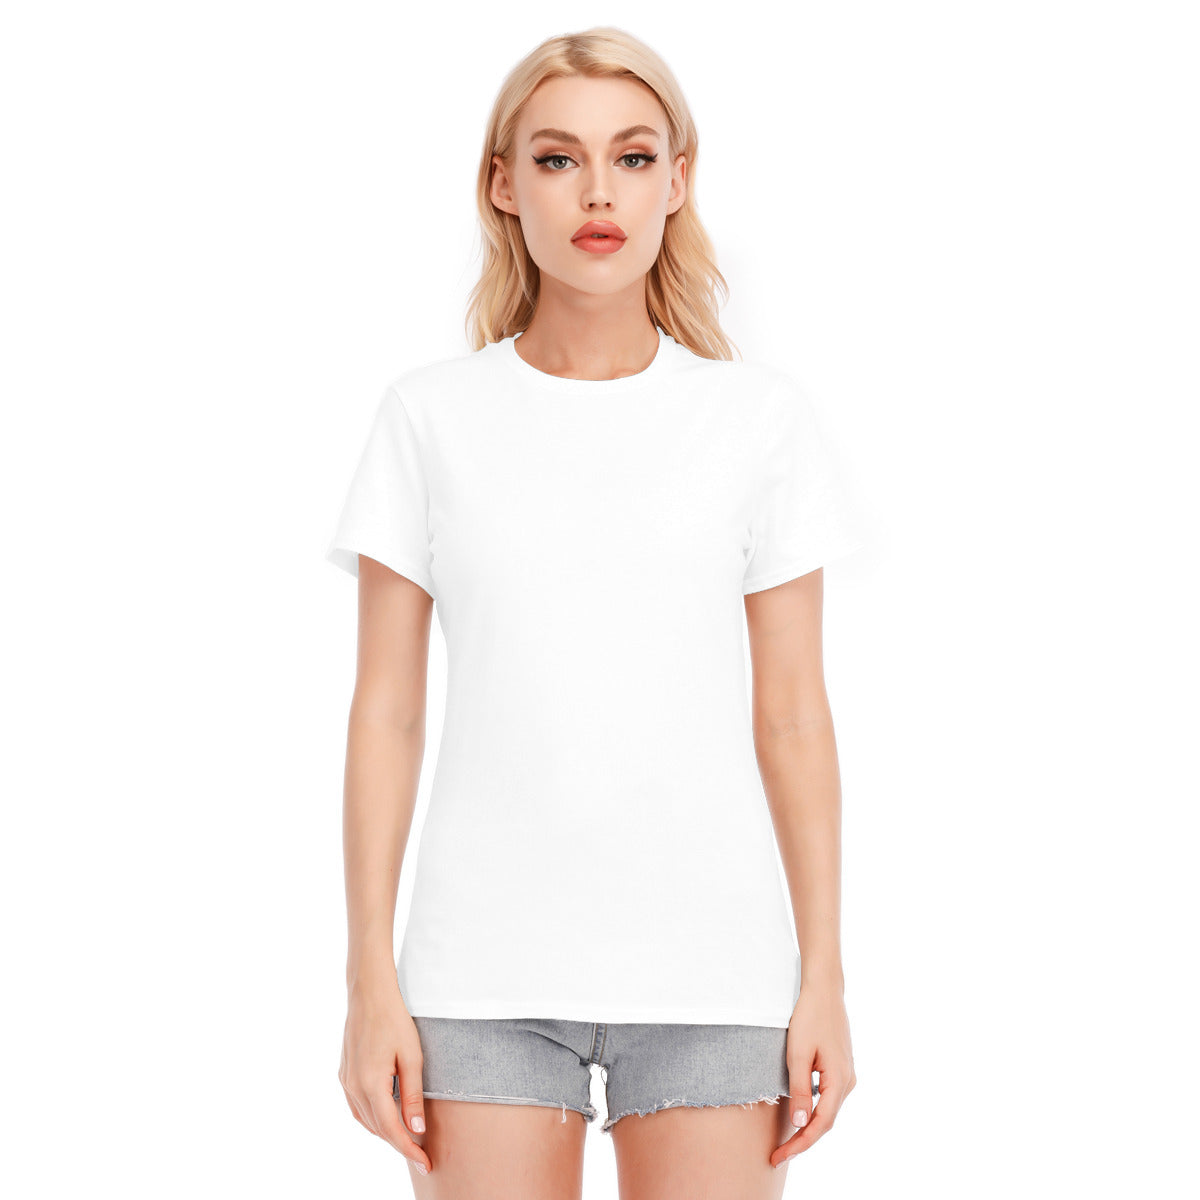 Fantasy 146a -- Unisex O-neck Short Sleeve T-shirt